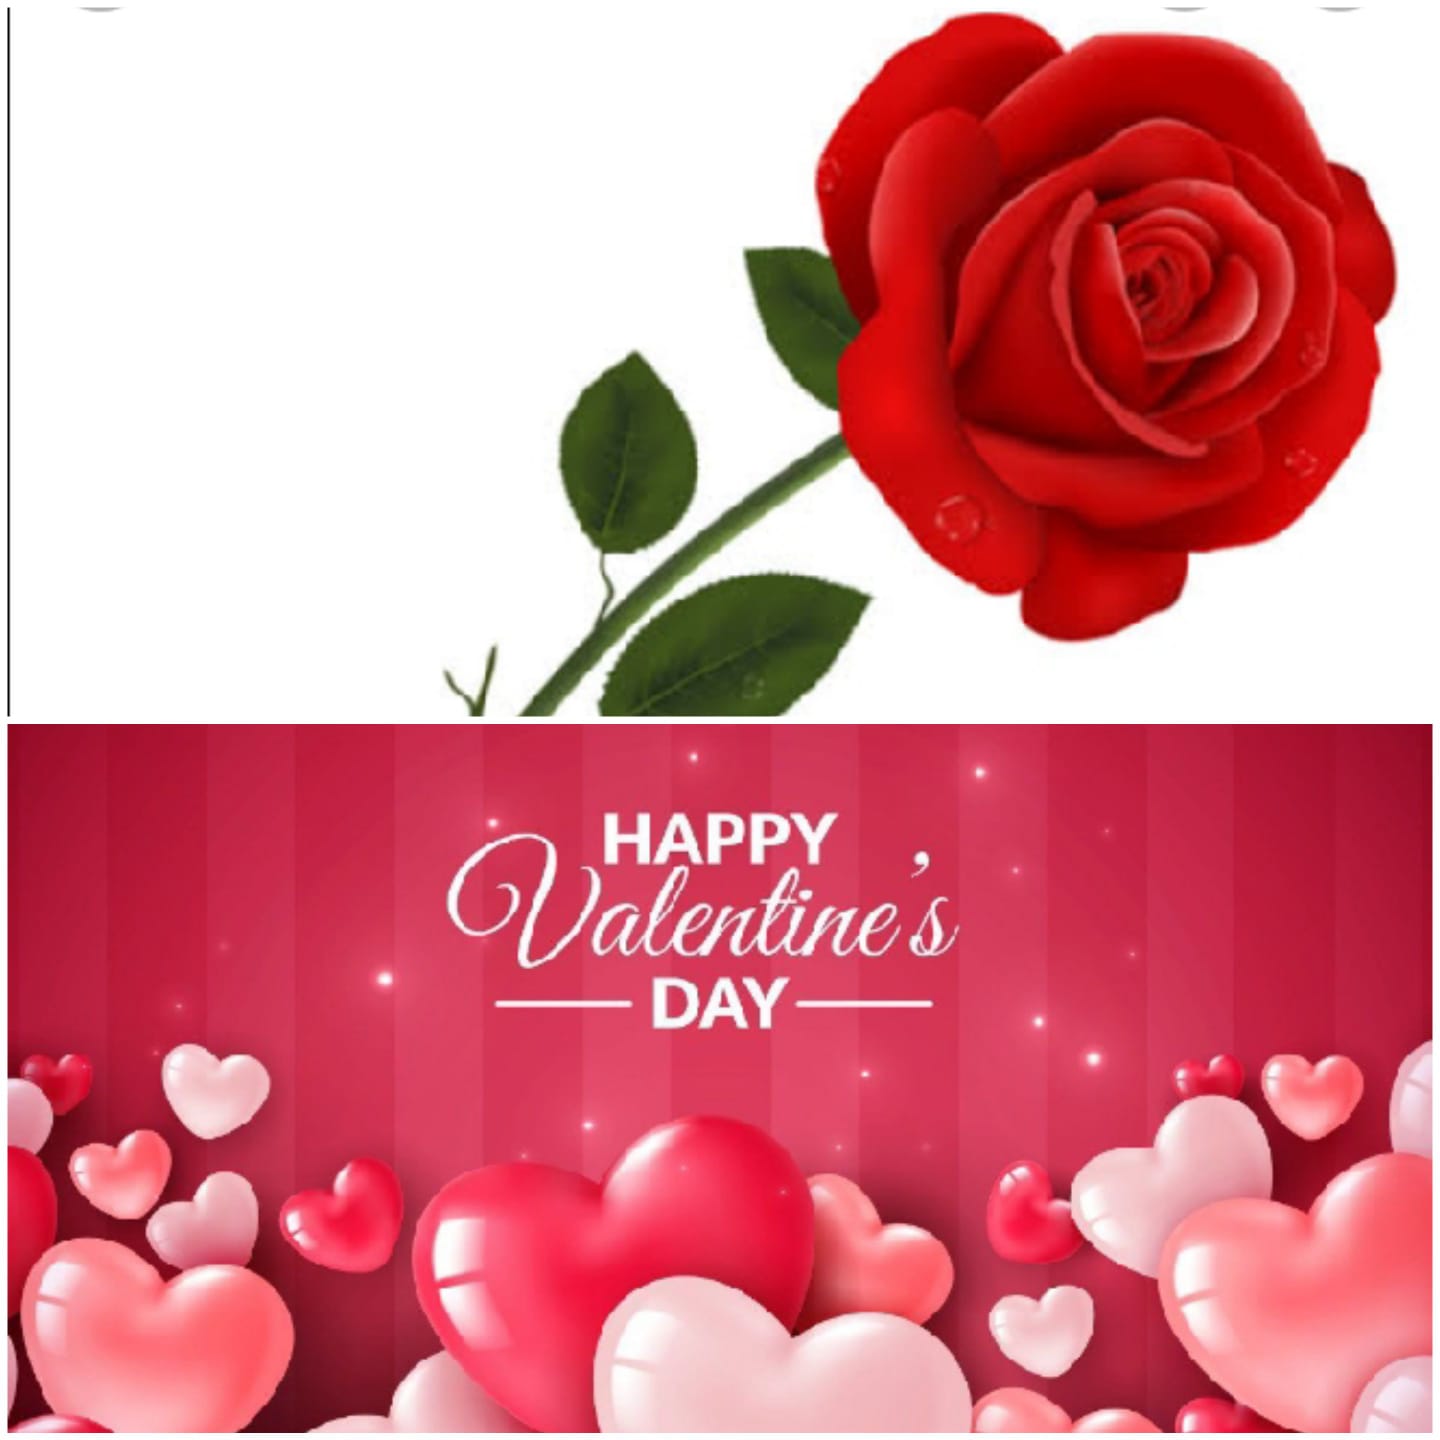 HAPPY VALENTINE’S DAY : तेरे-मेरे प्यार की खुशबू गुलाबों में, गुलाबों में भी…